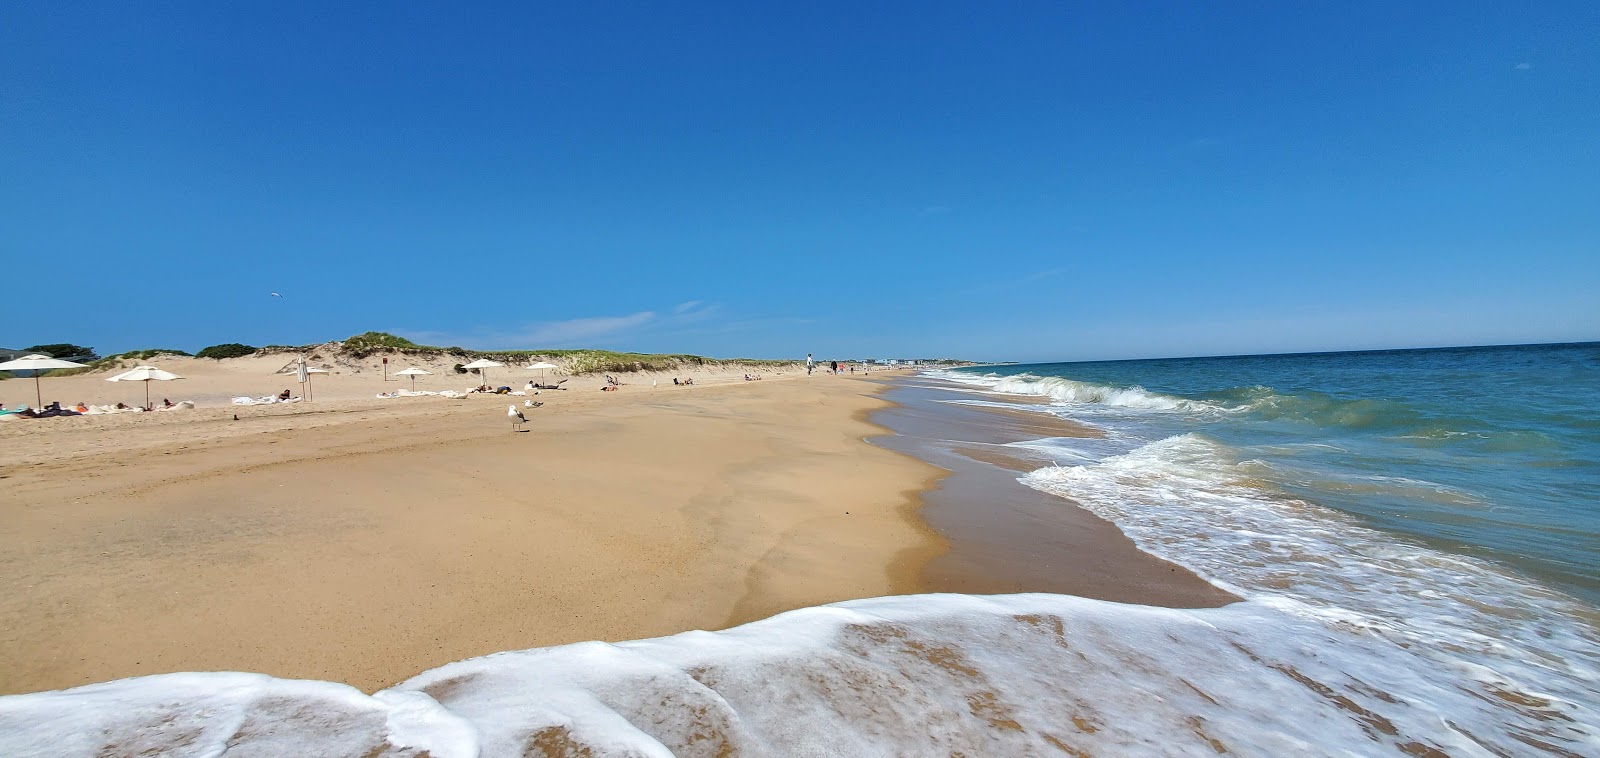 Foto de Kirk Park Beach con playa amplia